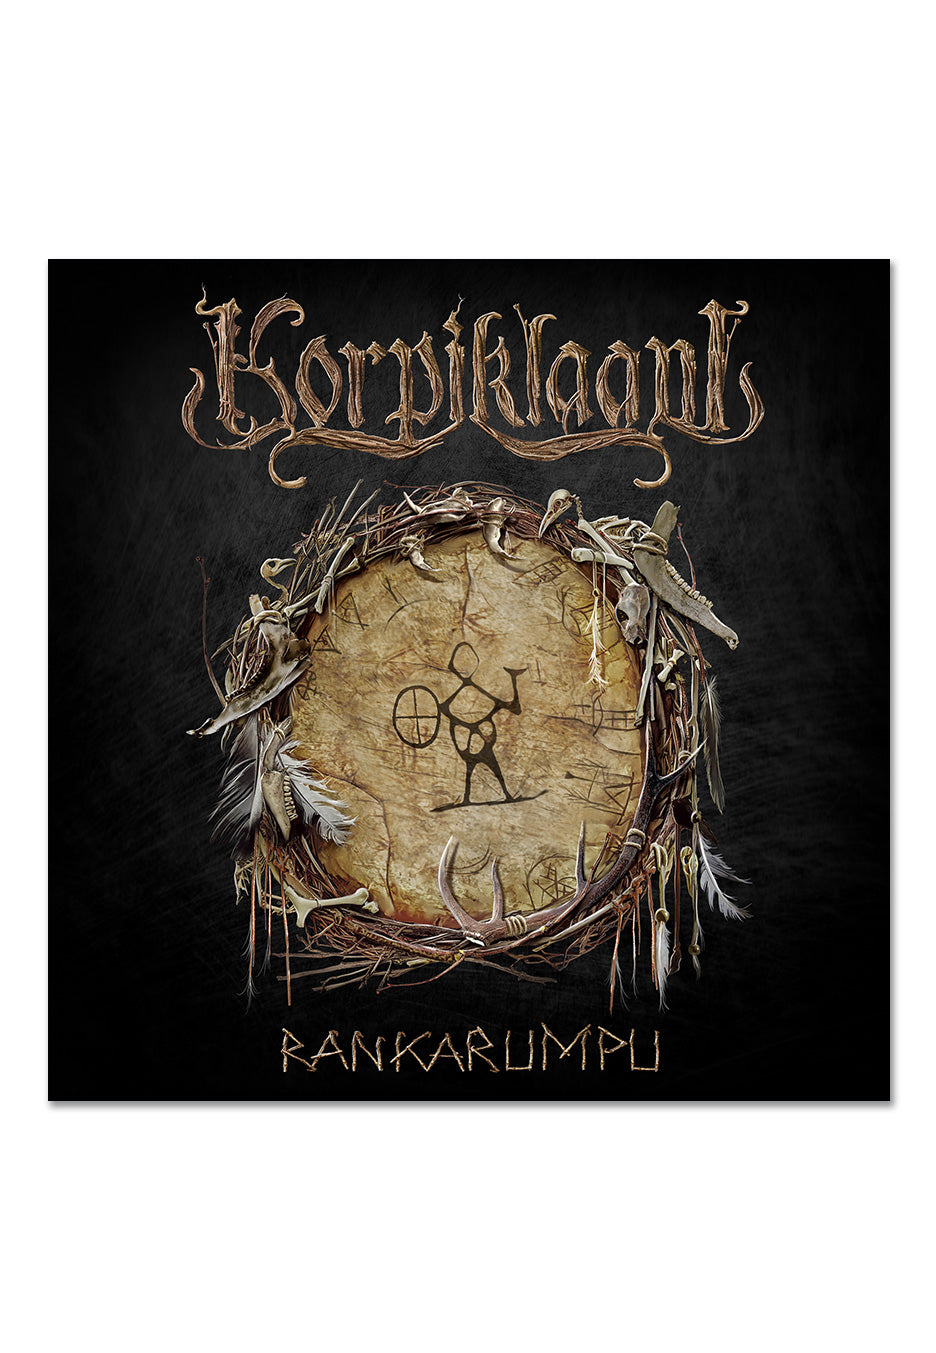 Korpiklaani - Rankarumpu - CD